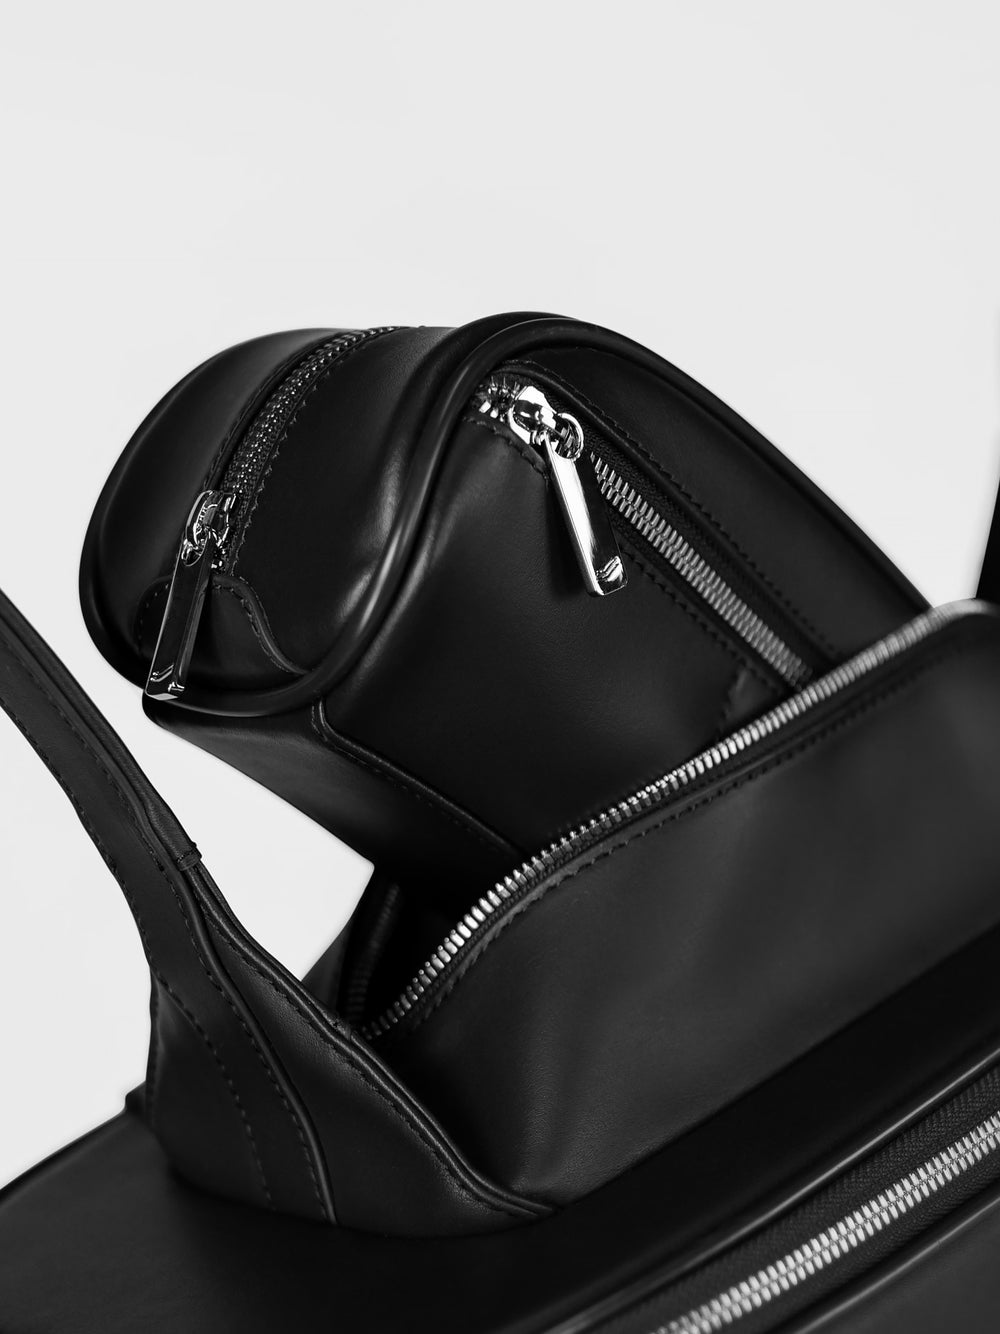 f12 leather dopp kit in black leather schwarzes leder